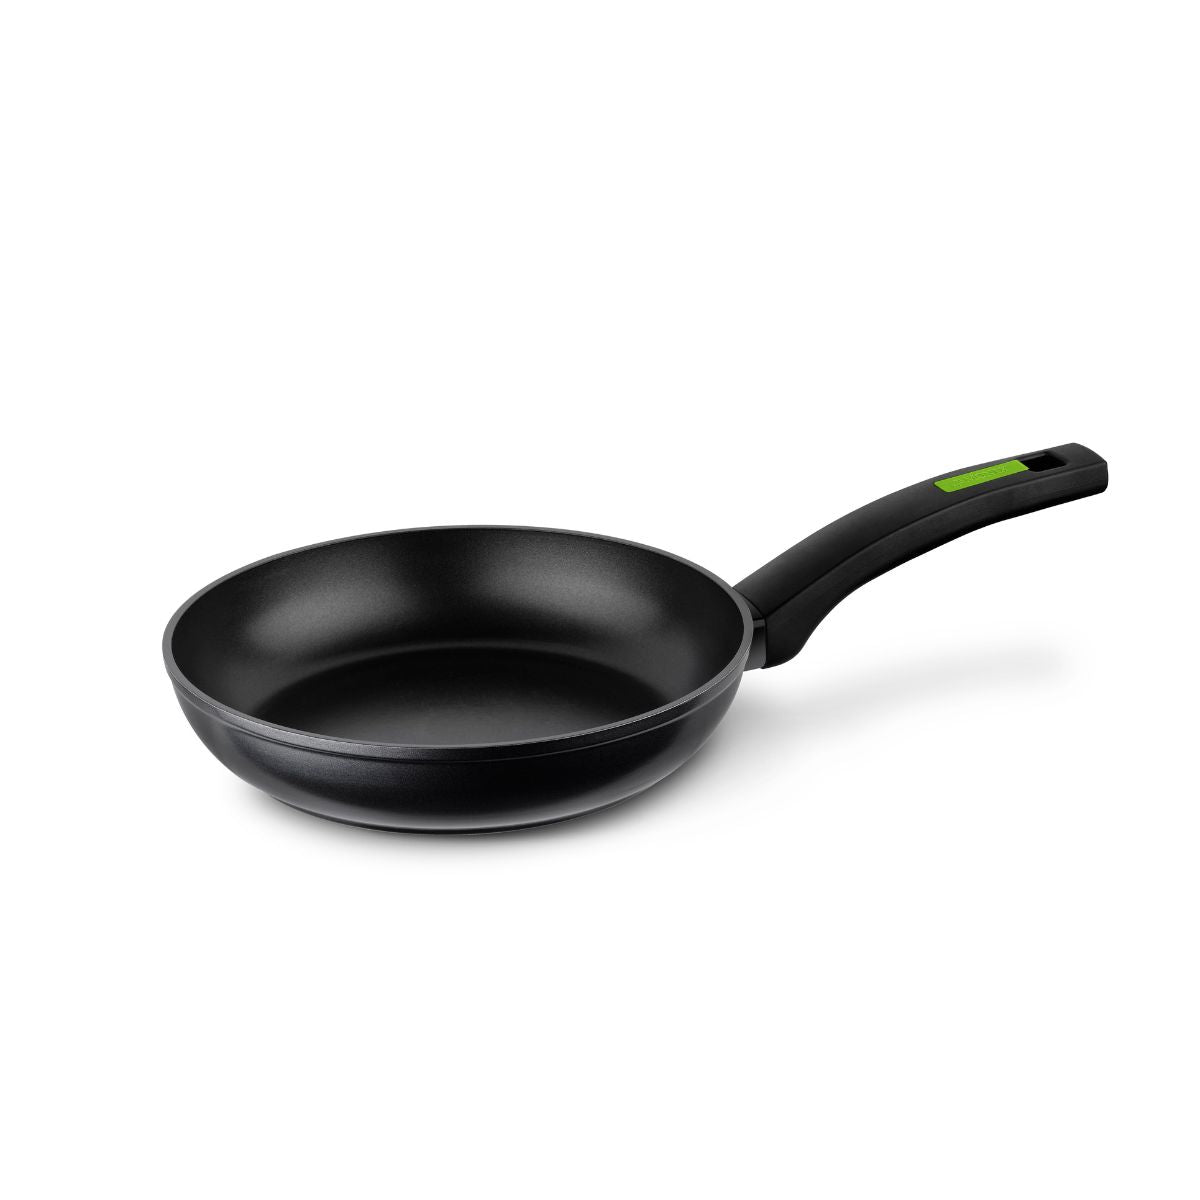 Green Frying Pan, 3-piece set